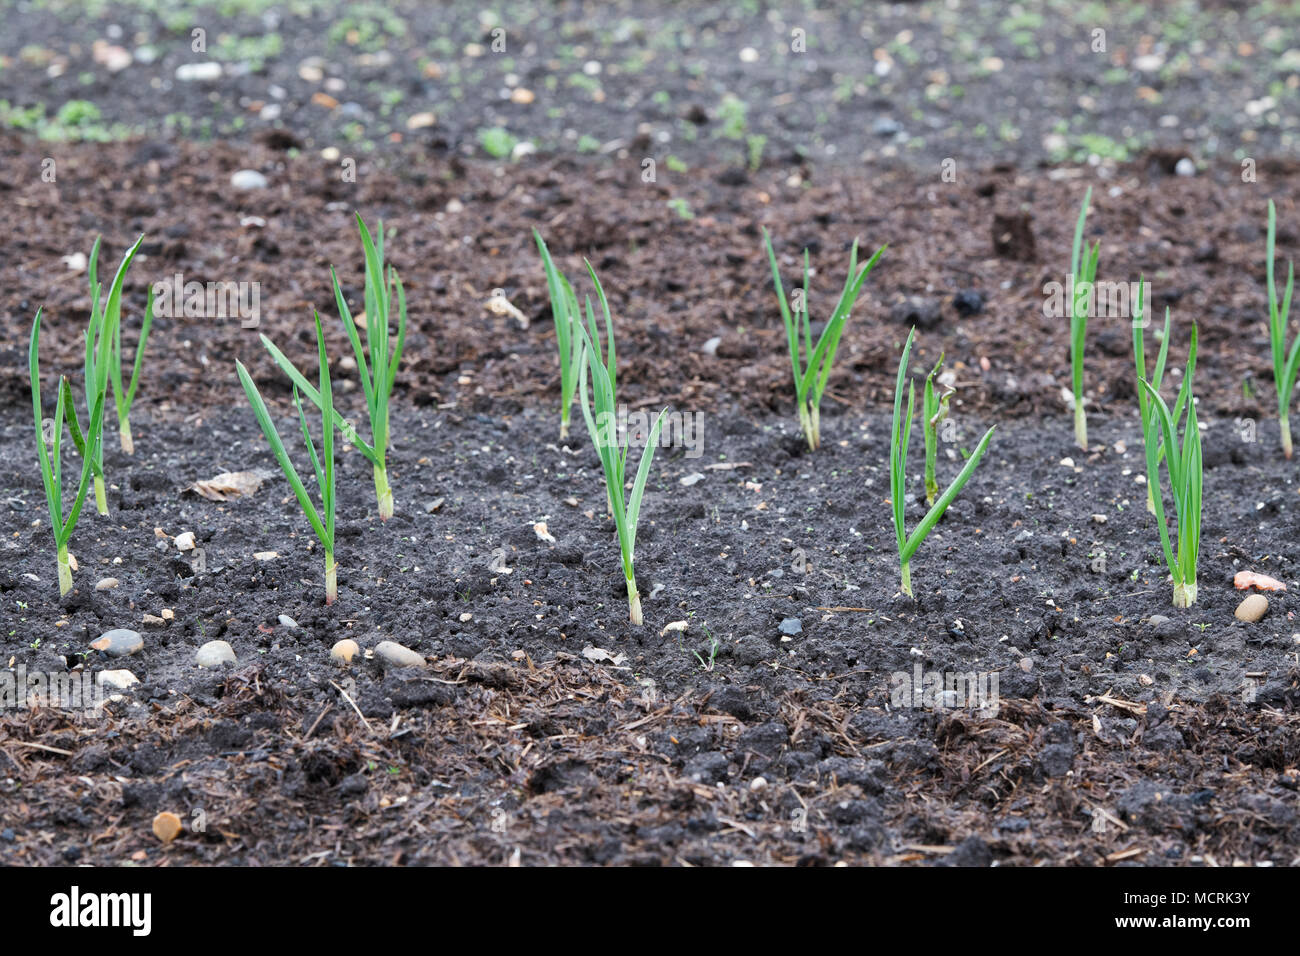 Allium Sativum. Young Garlic Mersley Wight plants growing in a vegetable garden in early springtime. UK Stock Photo